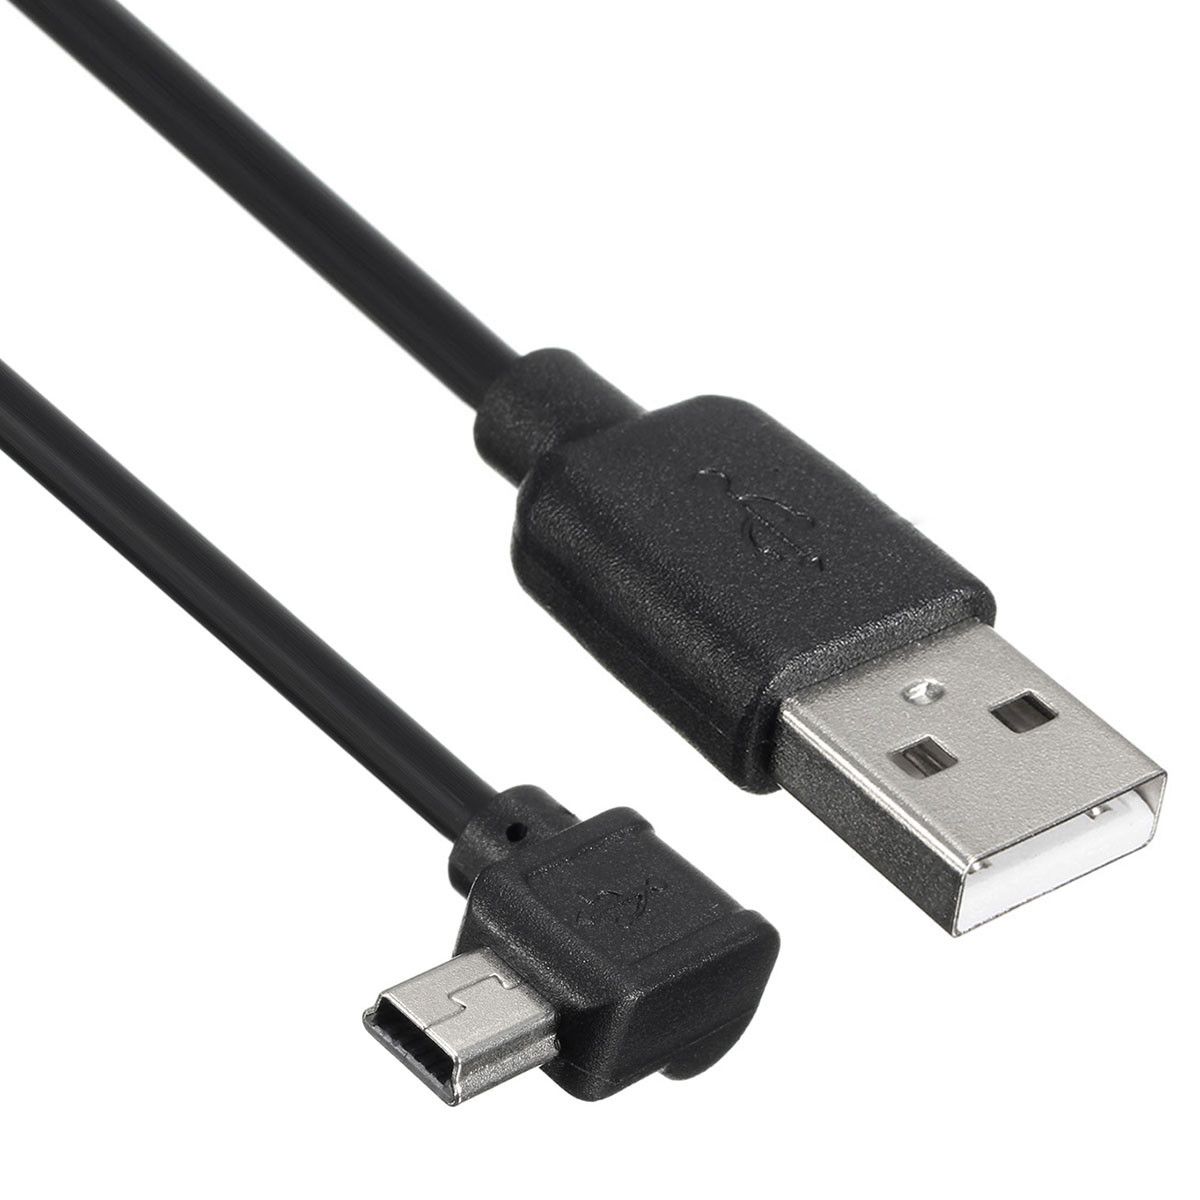 Mini-USB-PC-Data-Cable-For-Genuine-TomTom-XL-XXL-150cm-Long-Black-1386060